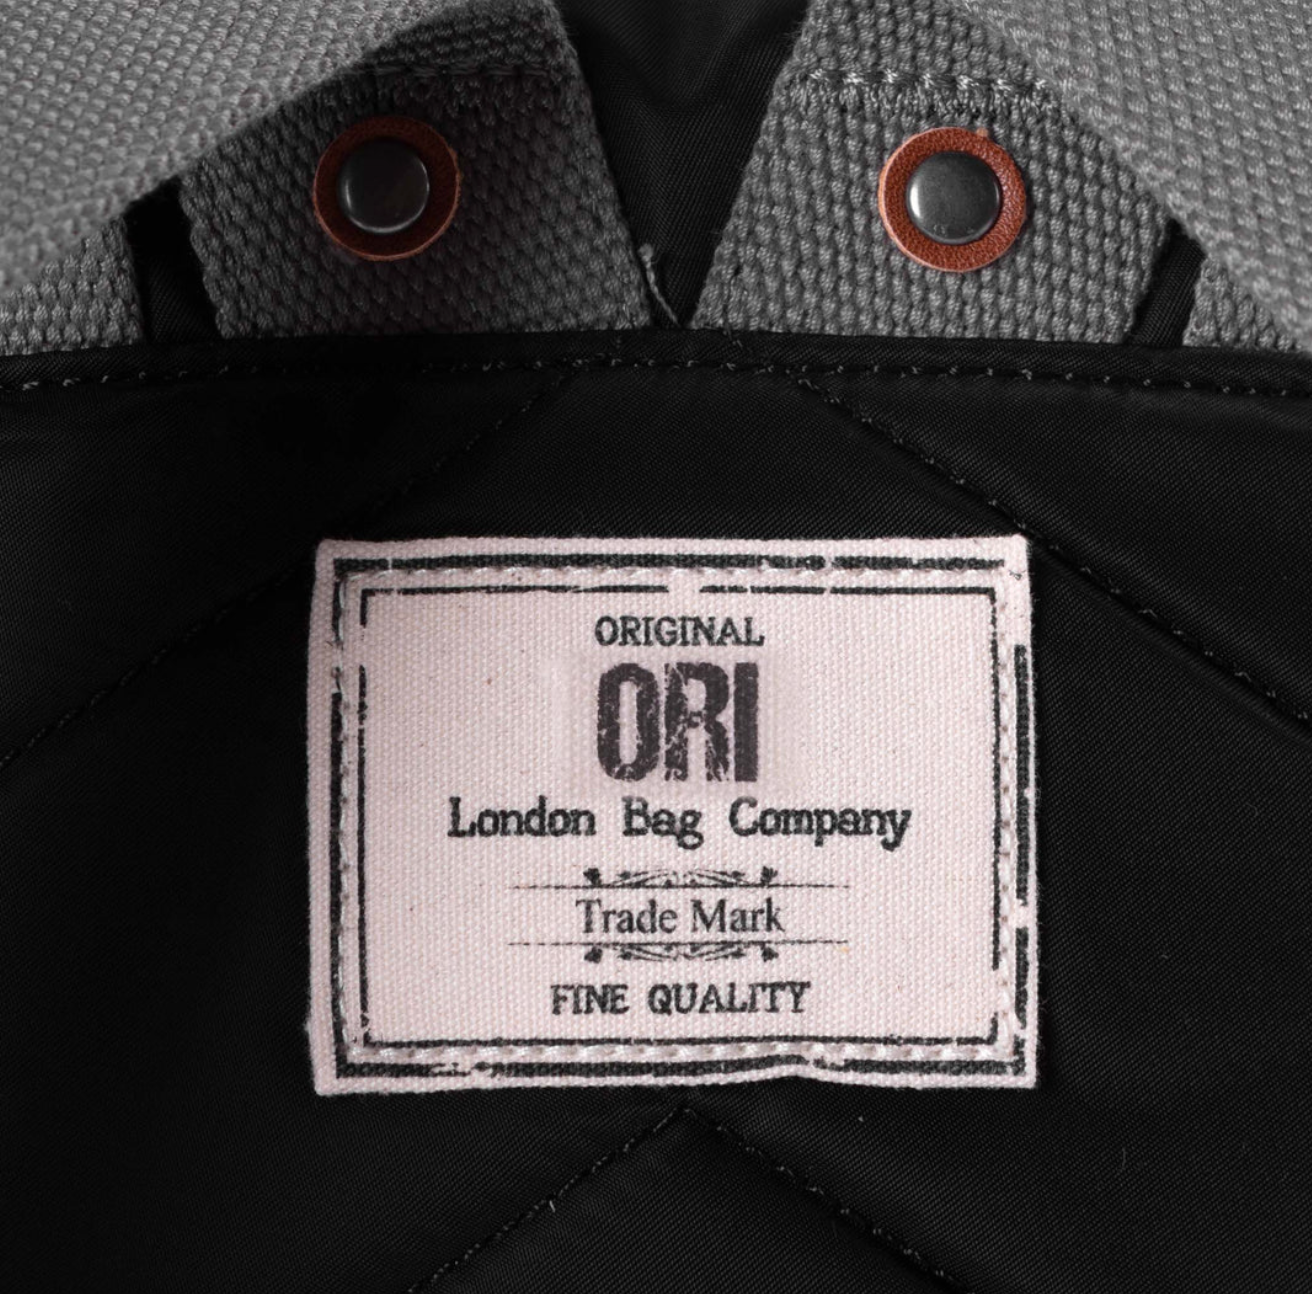 ORI Bantry B Sustainable Nylon Backpack – Small – Black